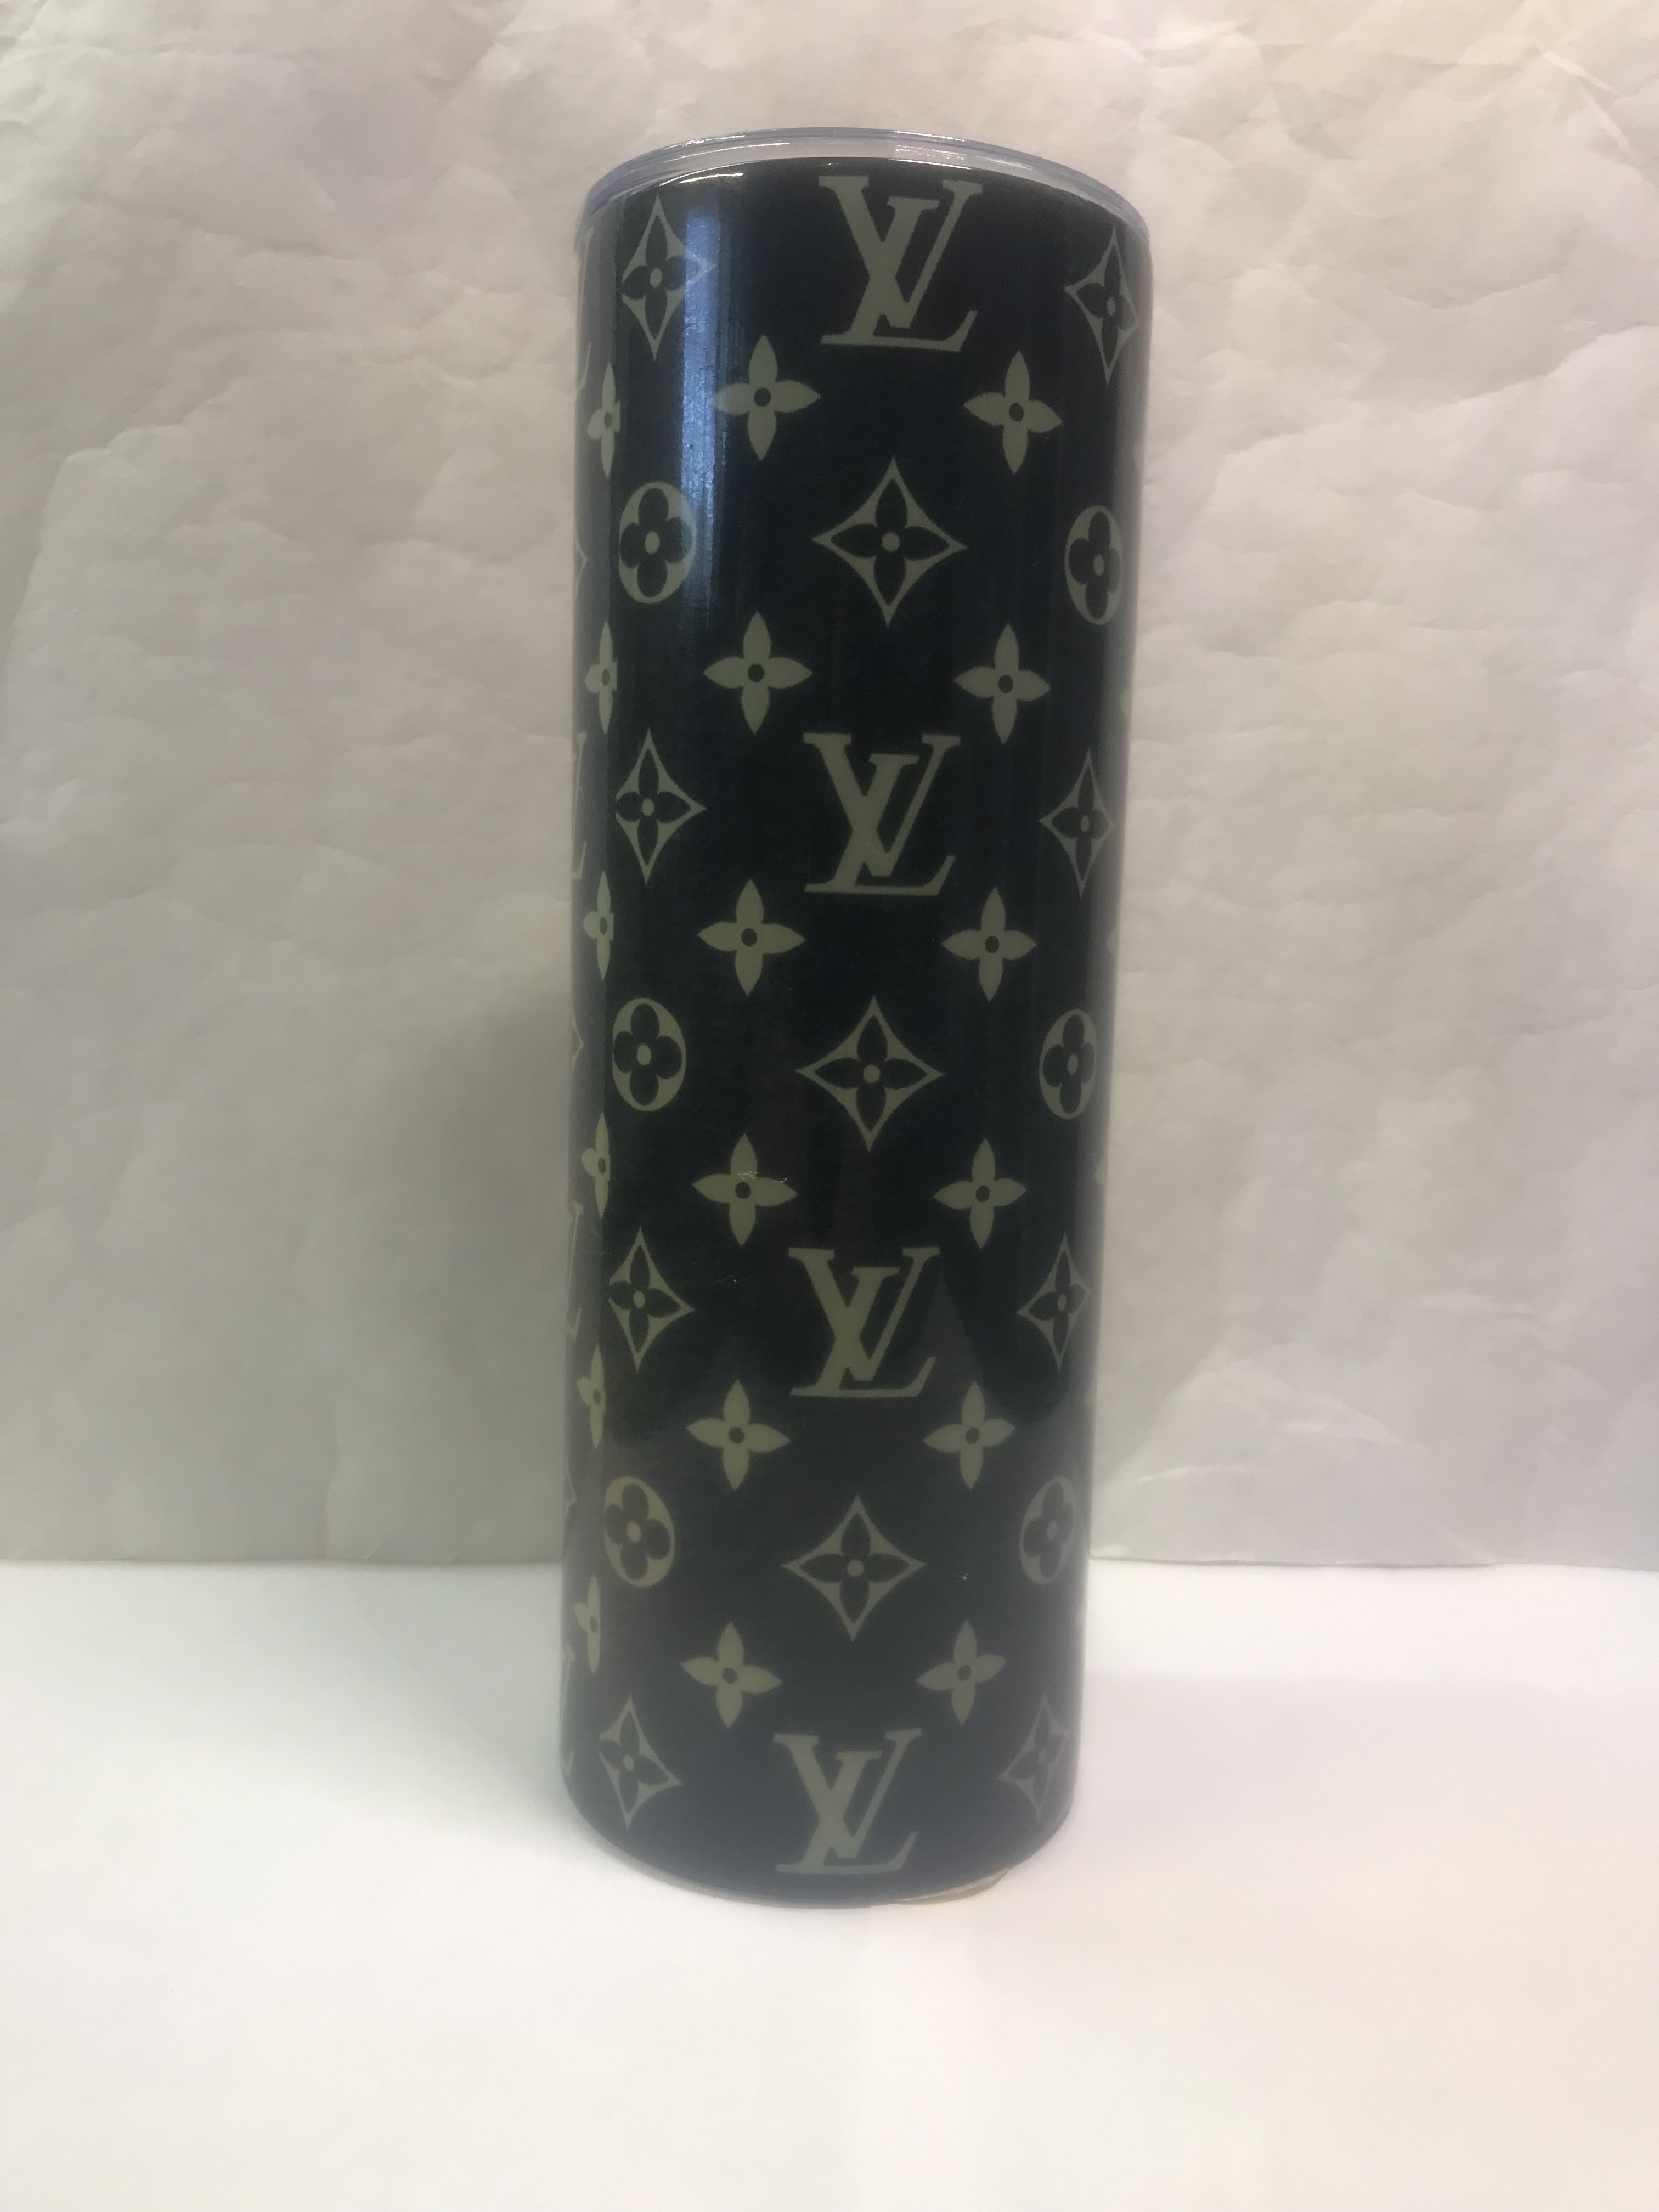 Louis Vuitton purse tumbler #pursetumbler #customtumbler #bigmad